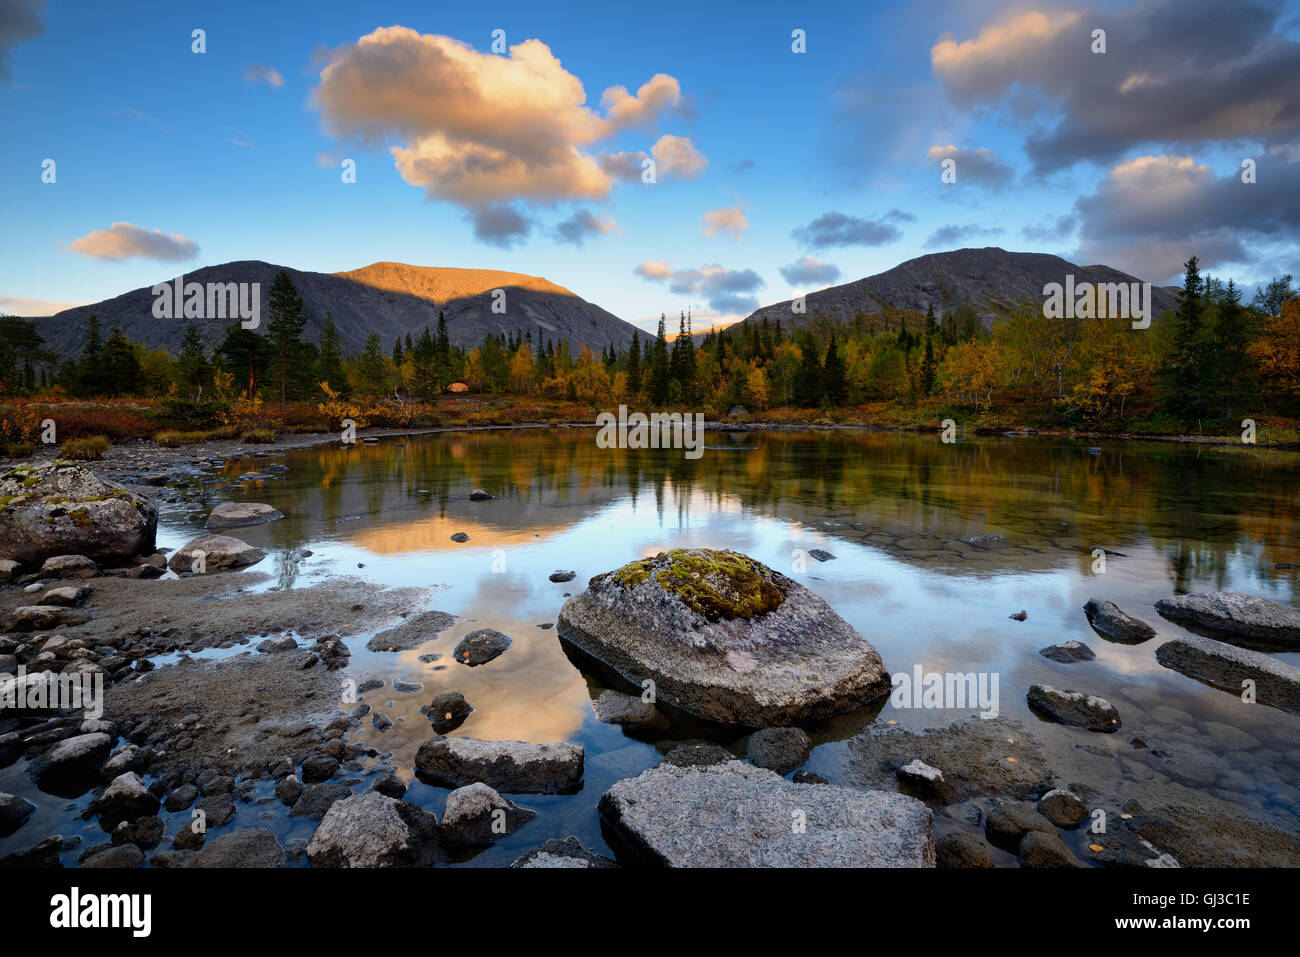 Landscape at Polygonal Lakes, Khibiny mountains, Kola Peninsula, Russia Stock Photo